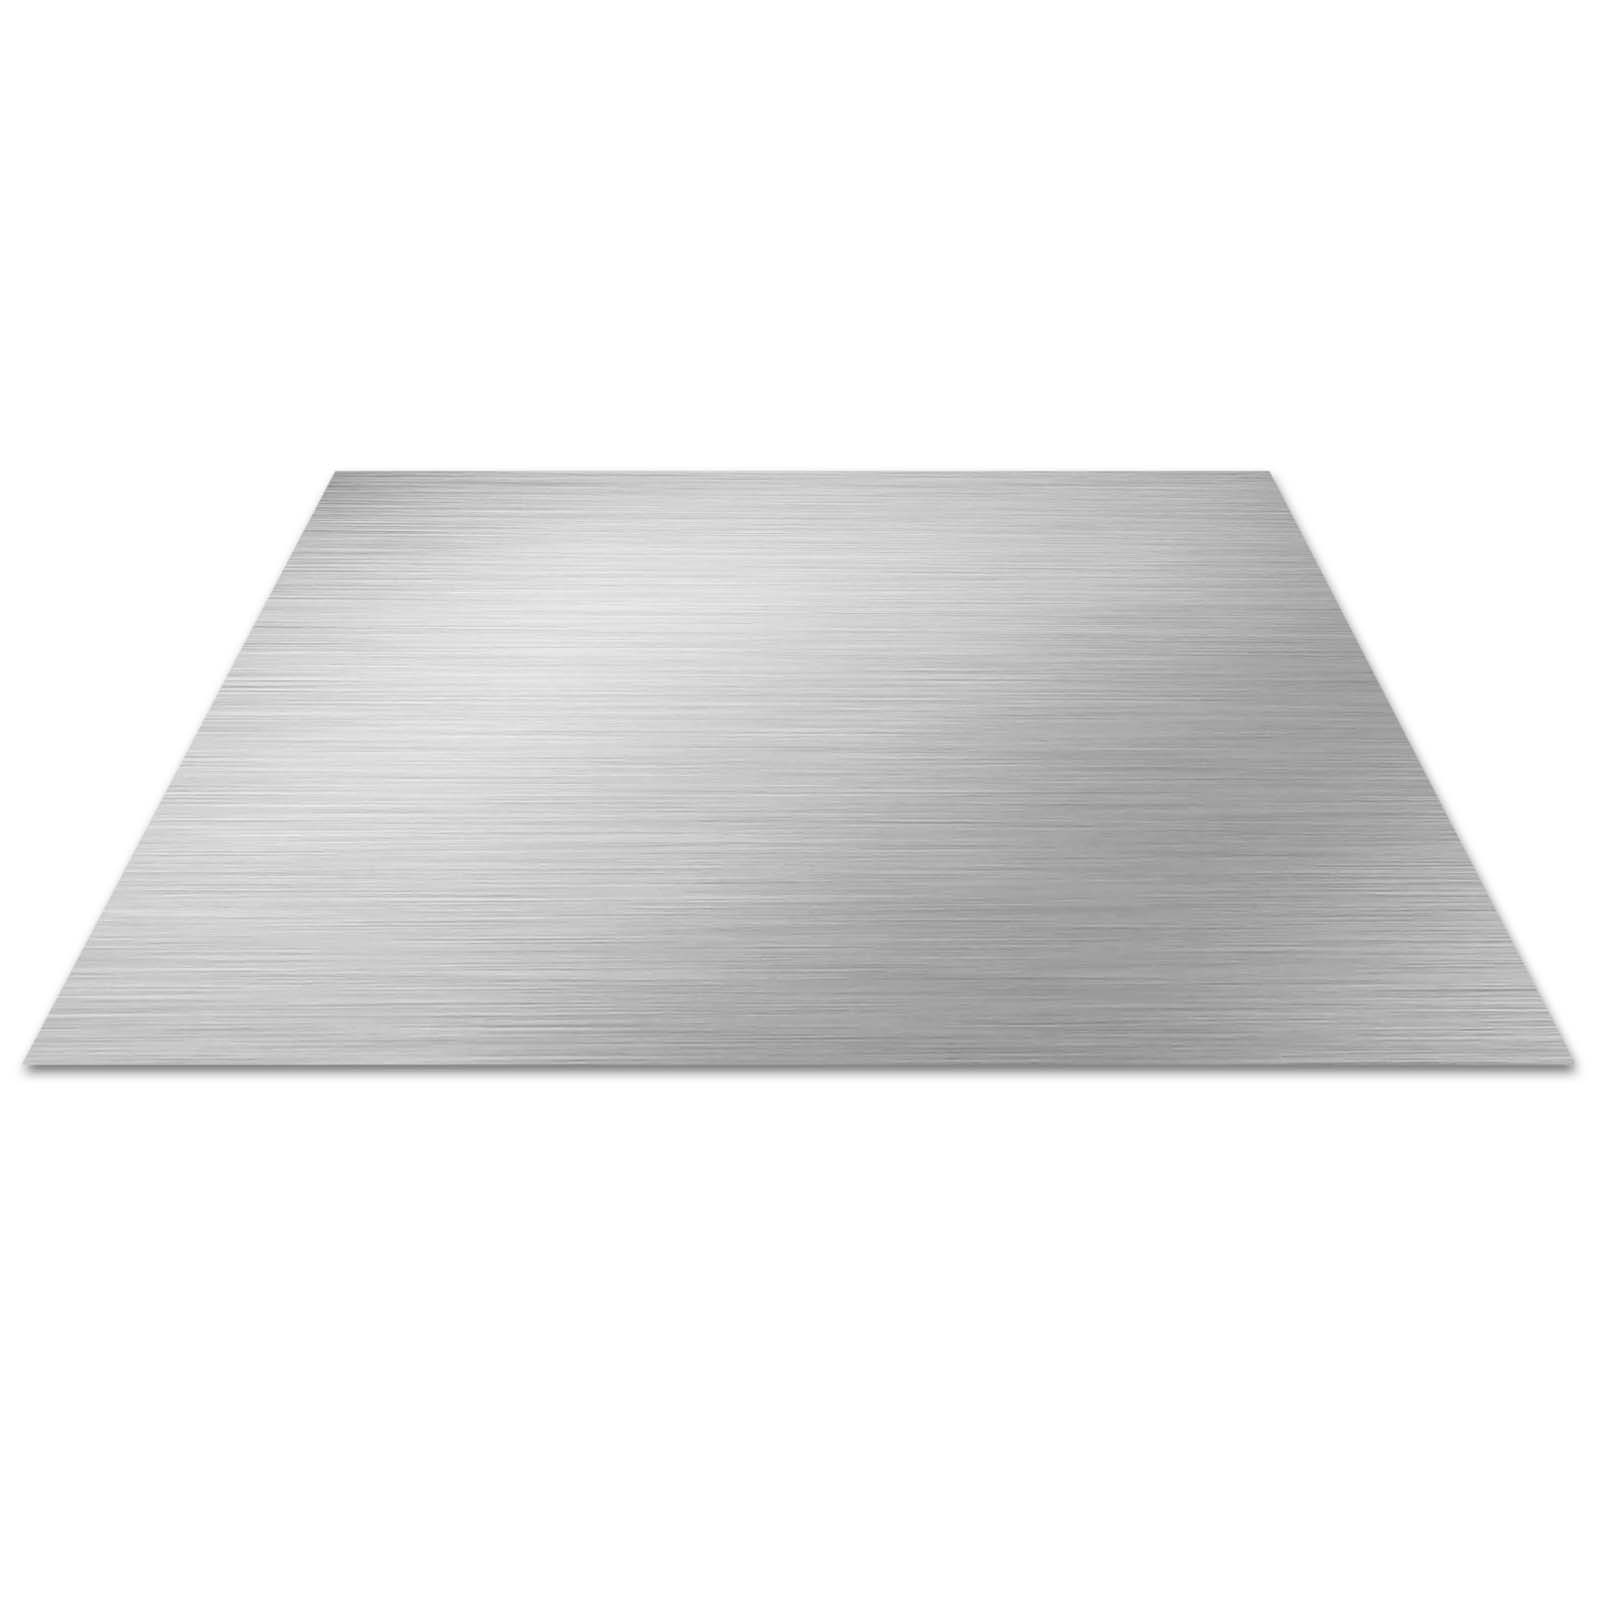 Tafel Edelstahl Blech kaltgewalzen 0,8x1000x2000 mm (2m²/Tafel) (Preis pro Stk.)